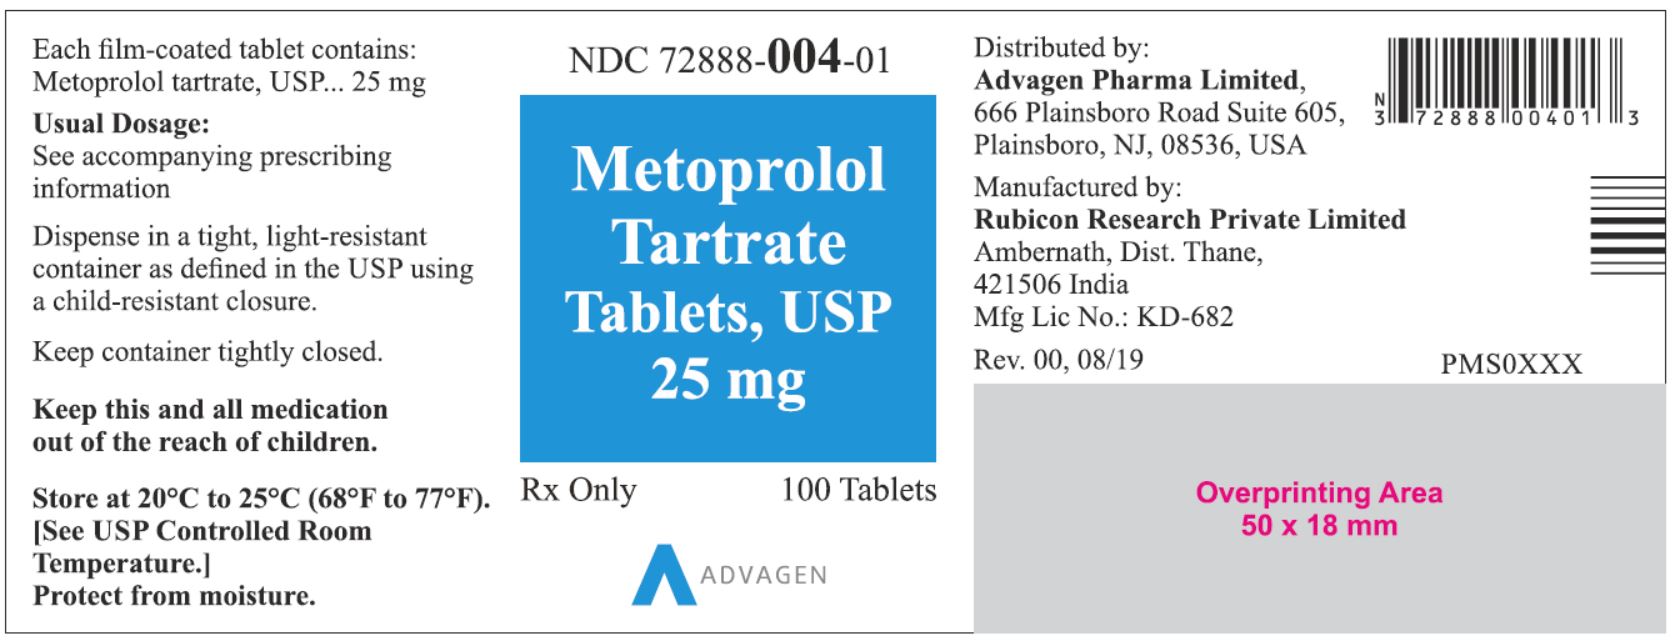 NDC 72888-004-01 - Metoprolol Tartrate Tablets, USP 25 mg - 100 Tablets